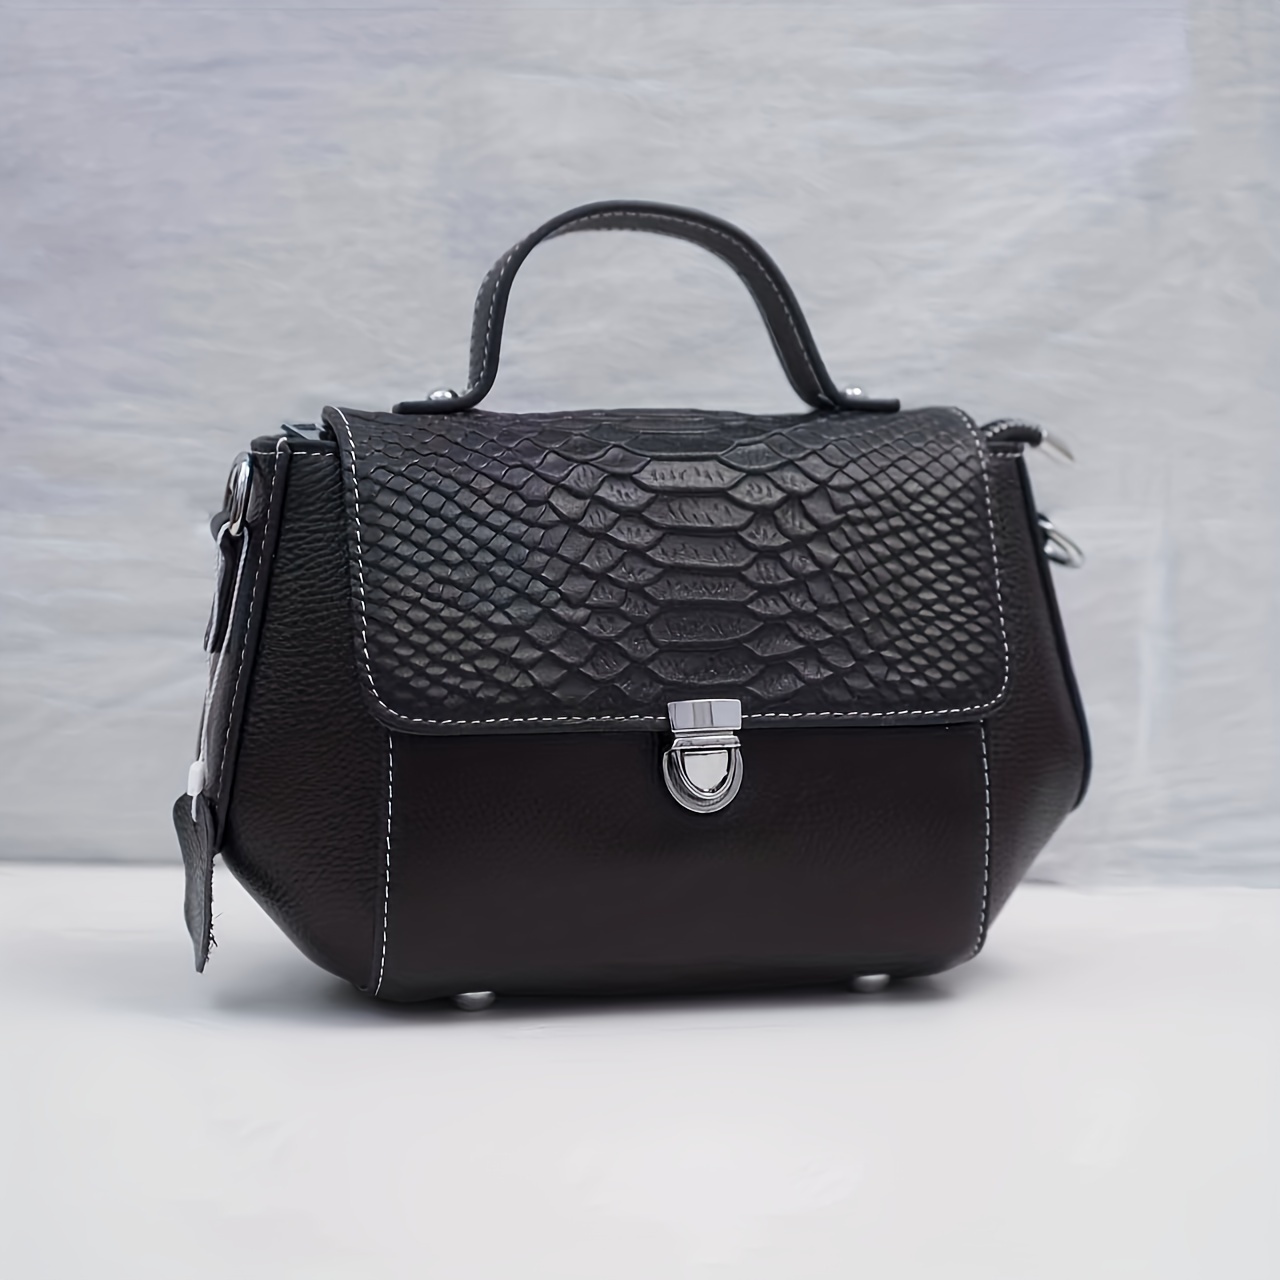 snakeskin pattern handbag womens fashion crossbody bag retro luxury genuine leather purse